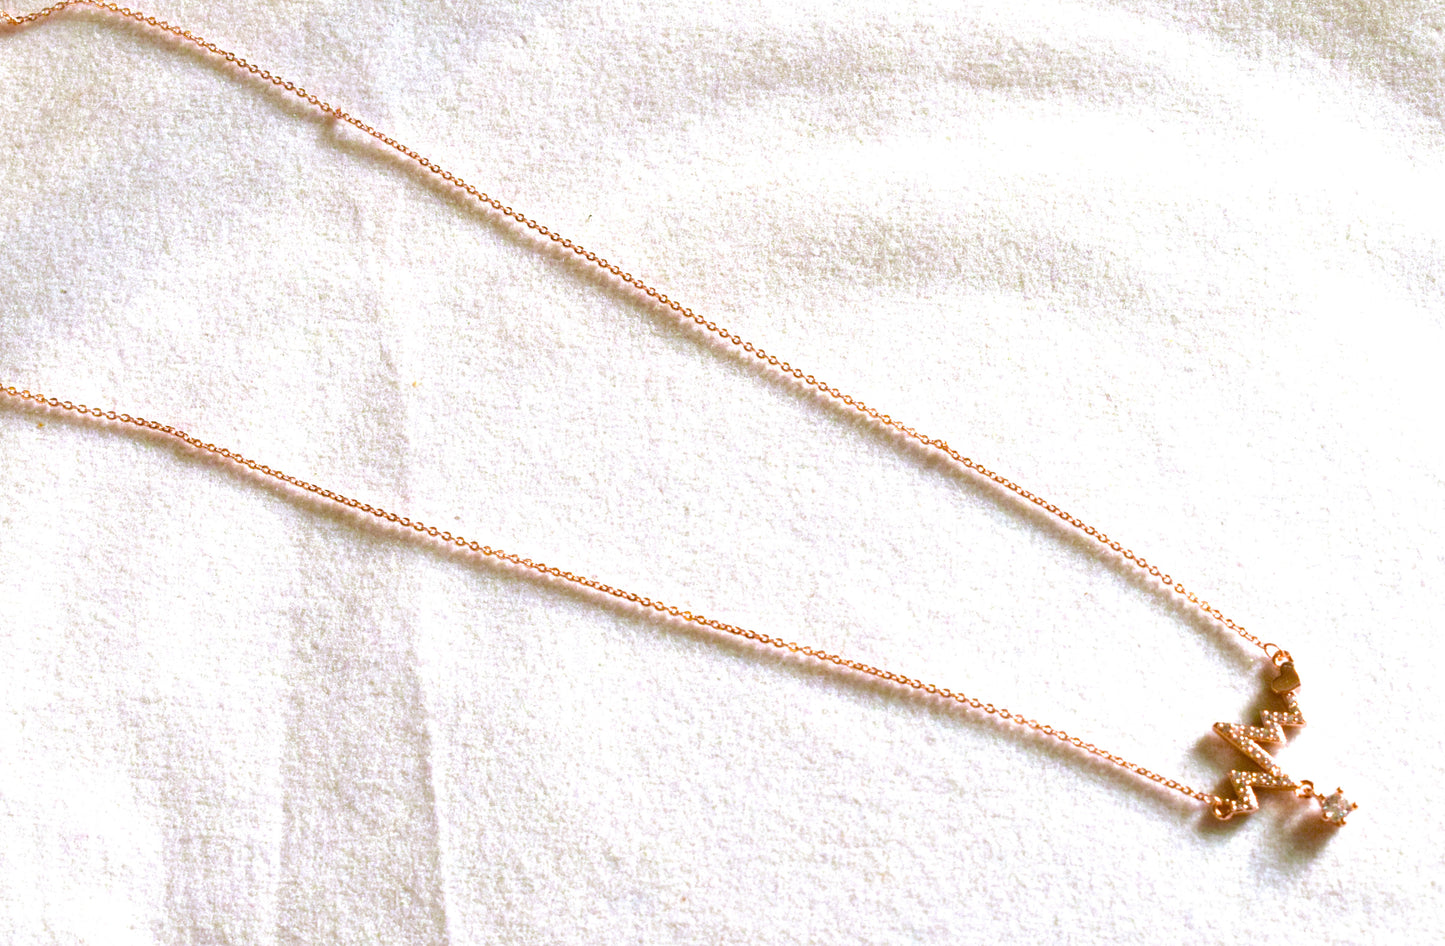 Heartbeat Crystal Dainty Pendant Necklace